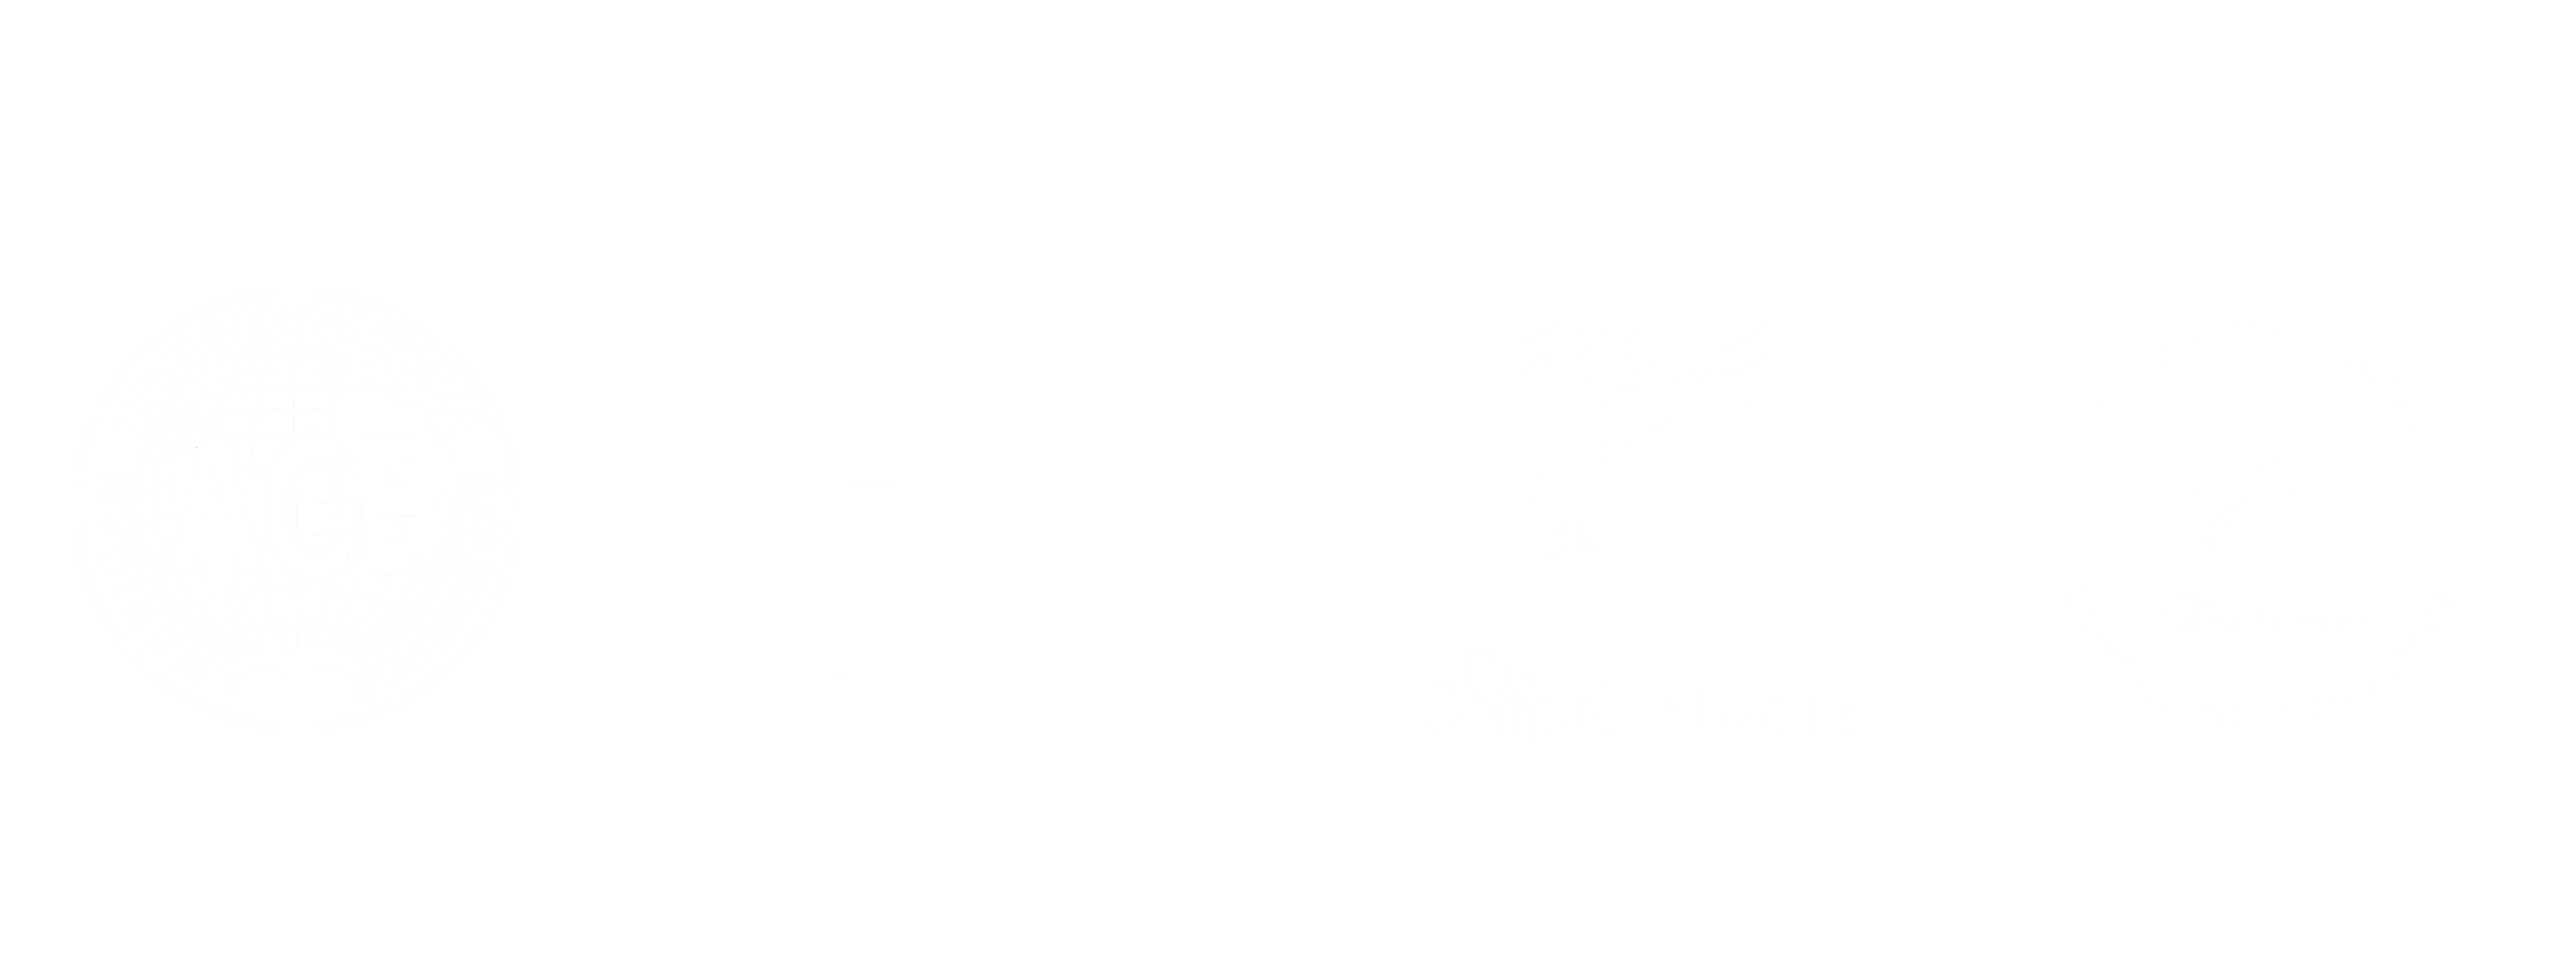 ACE Co Branding Logos